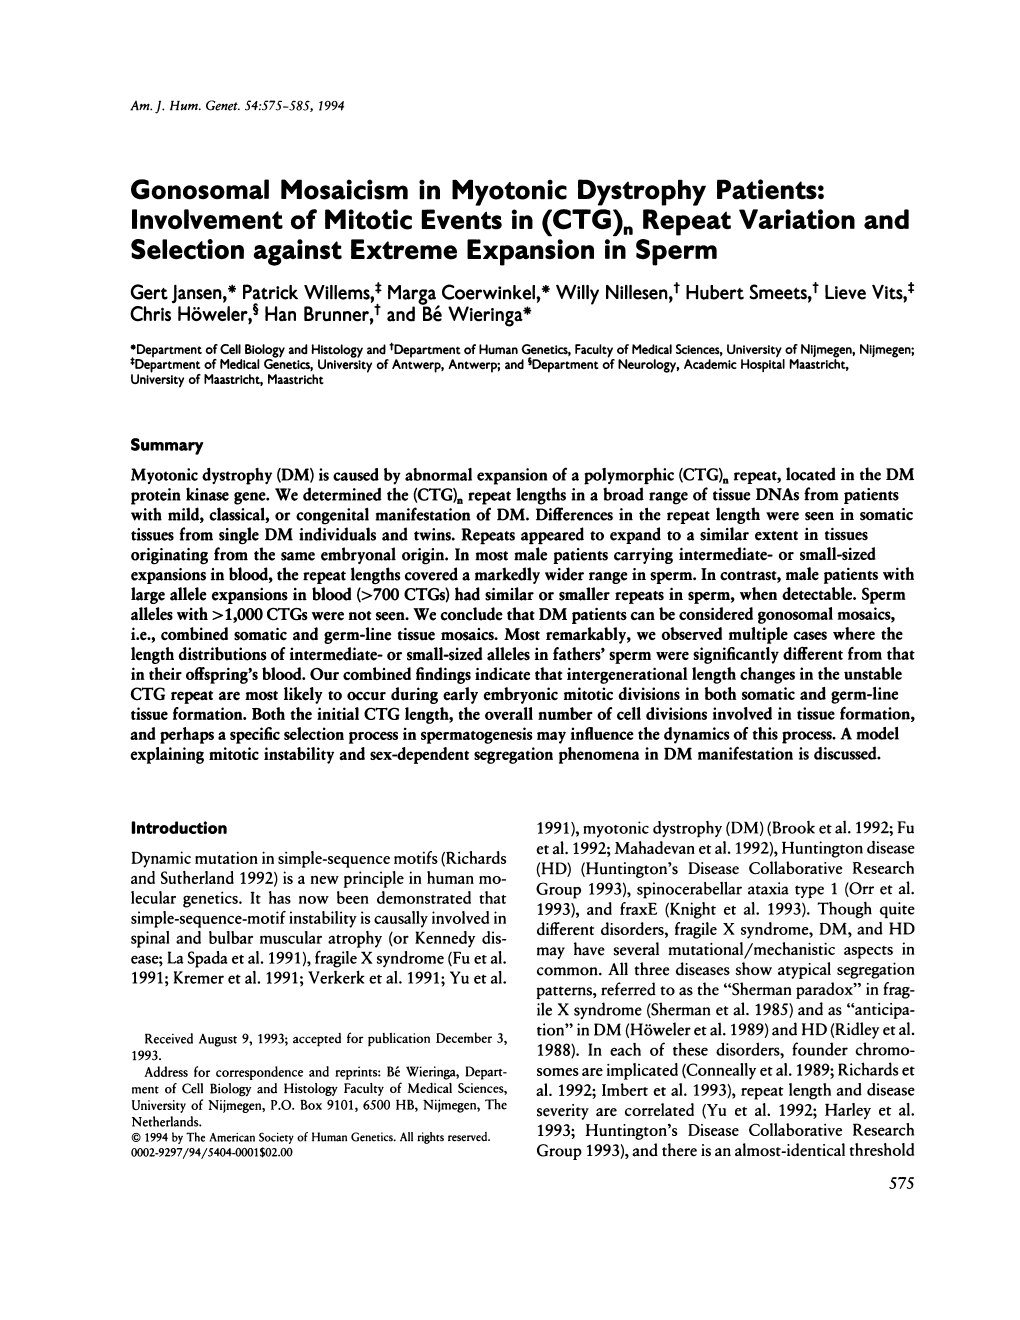 Gonosomal Mosaicism in Myotonic Dystrophy Patients